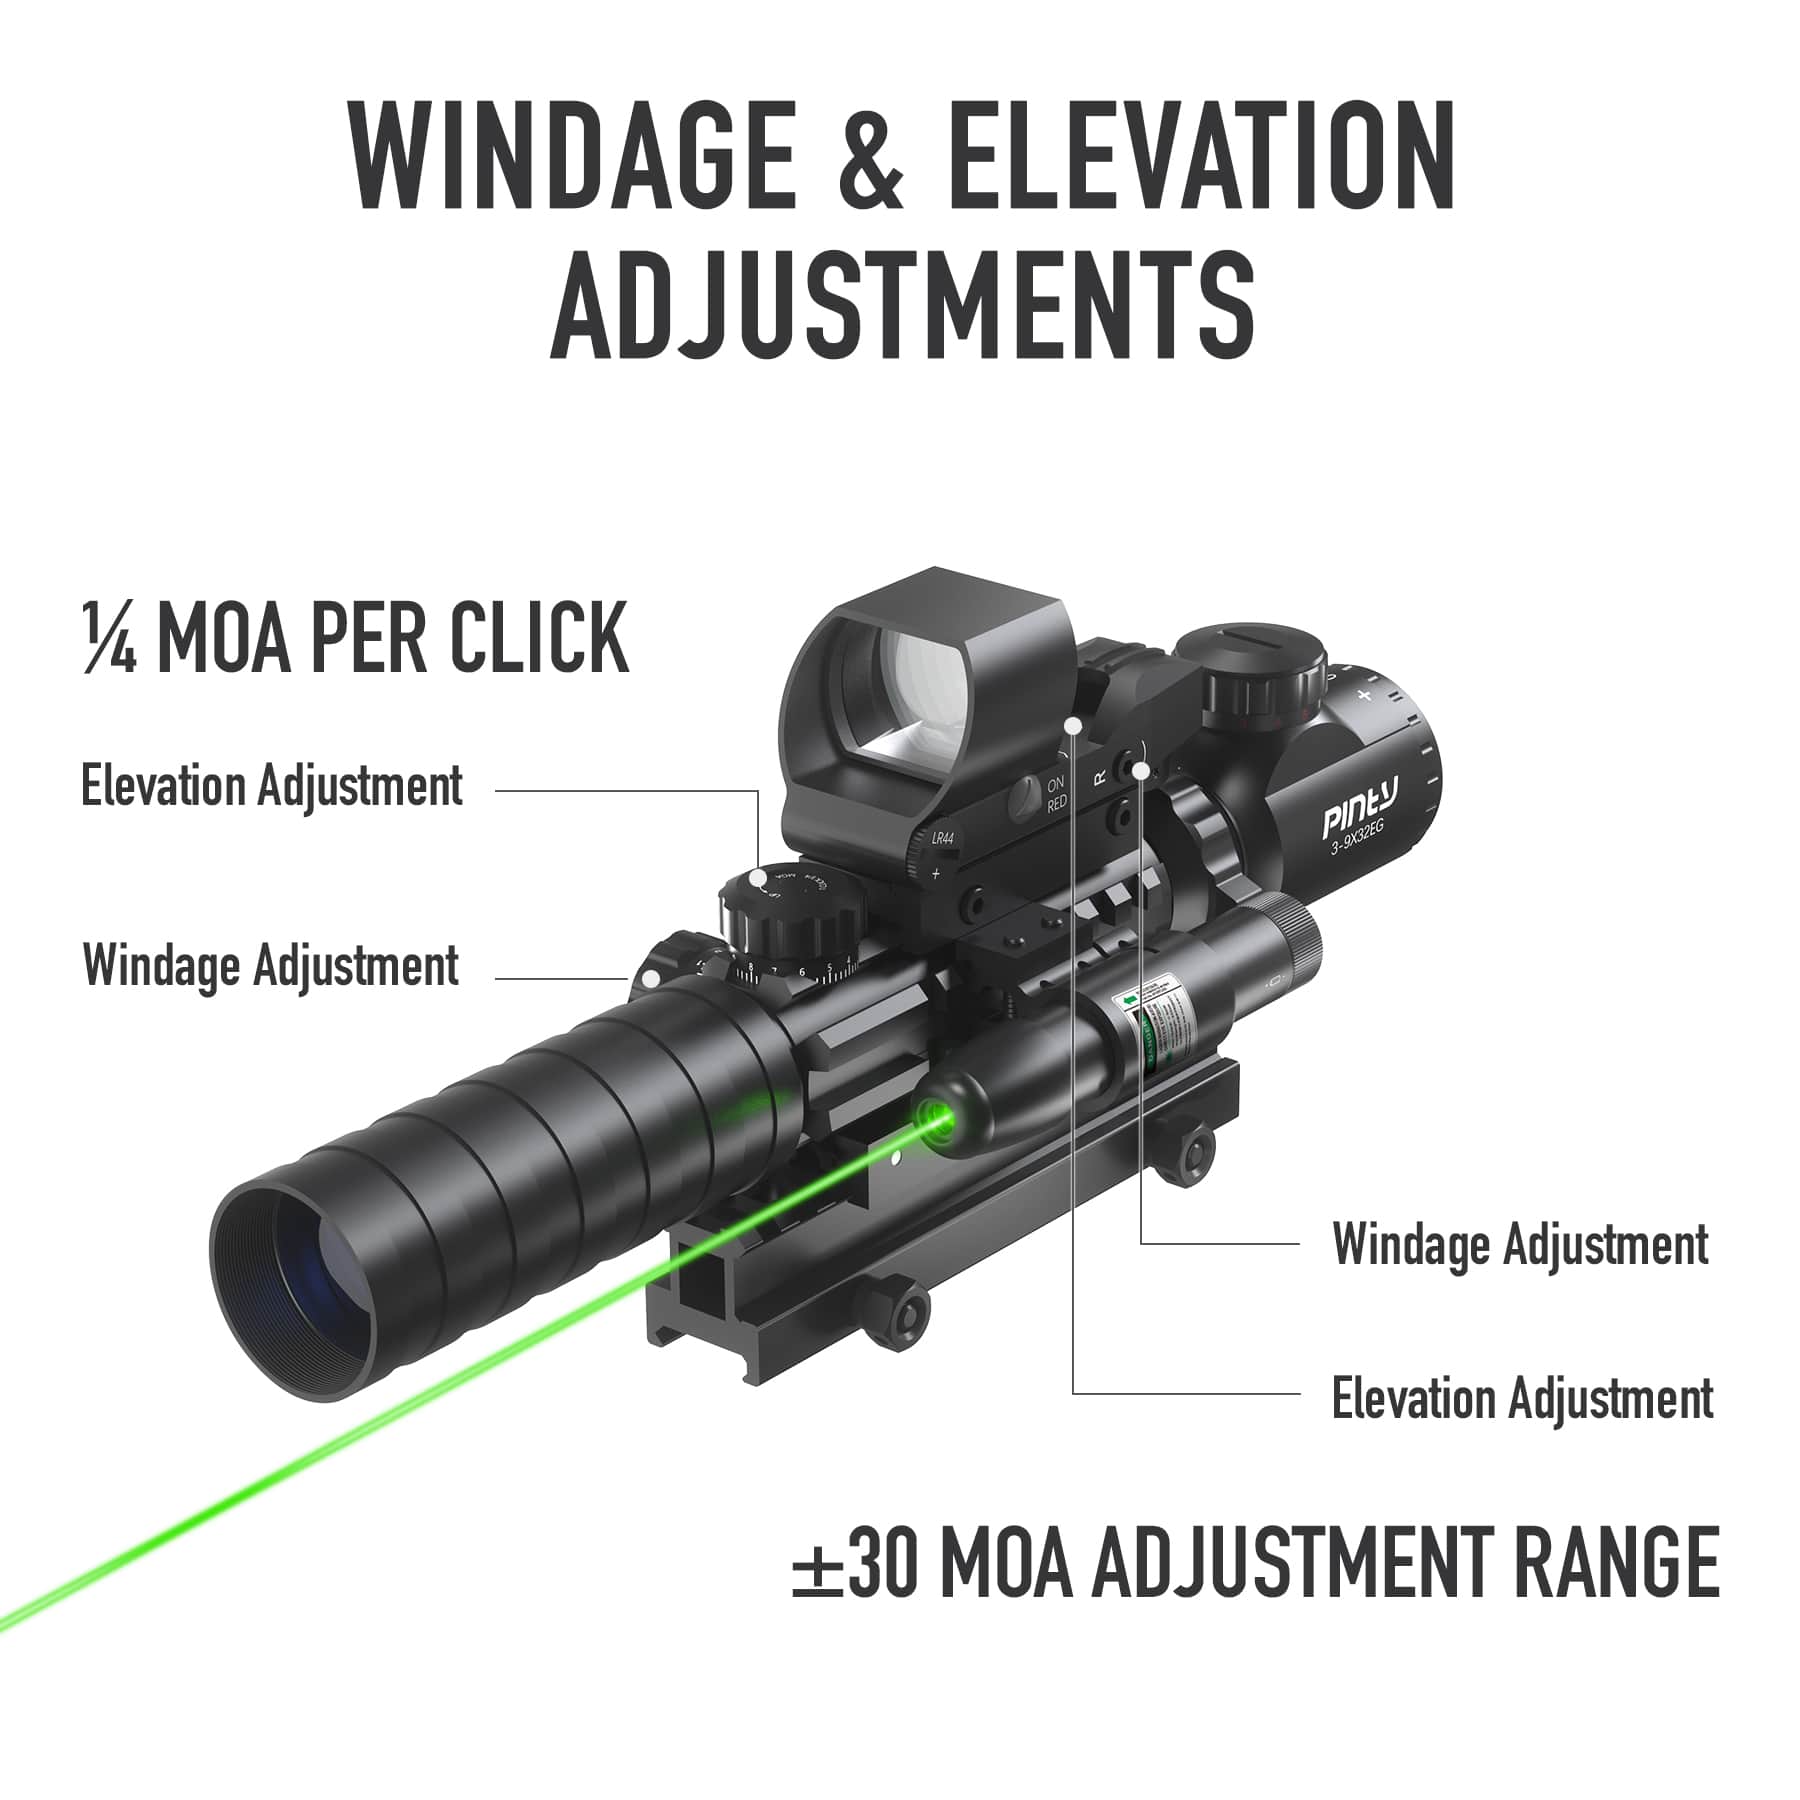       Rifle-Scope-Red-_-Green-Dot-Reflex-Green-Laser-0.83-High-13-Slots-Riser-Mount-MidTen-4-16x50-Tactical-Rifle-Scope-Dual-Illuminated-Optics-_-Rangefinder-Illuminated-Reflex-Sight-4-Holo